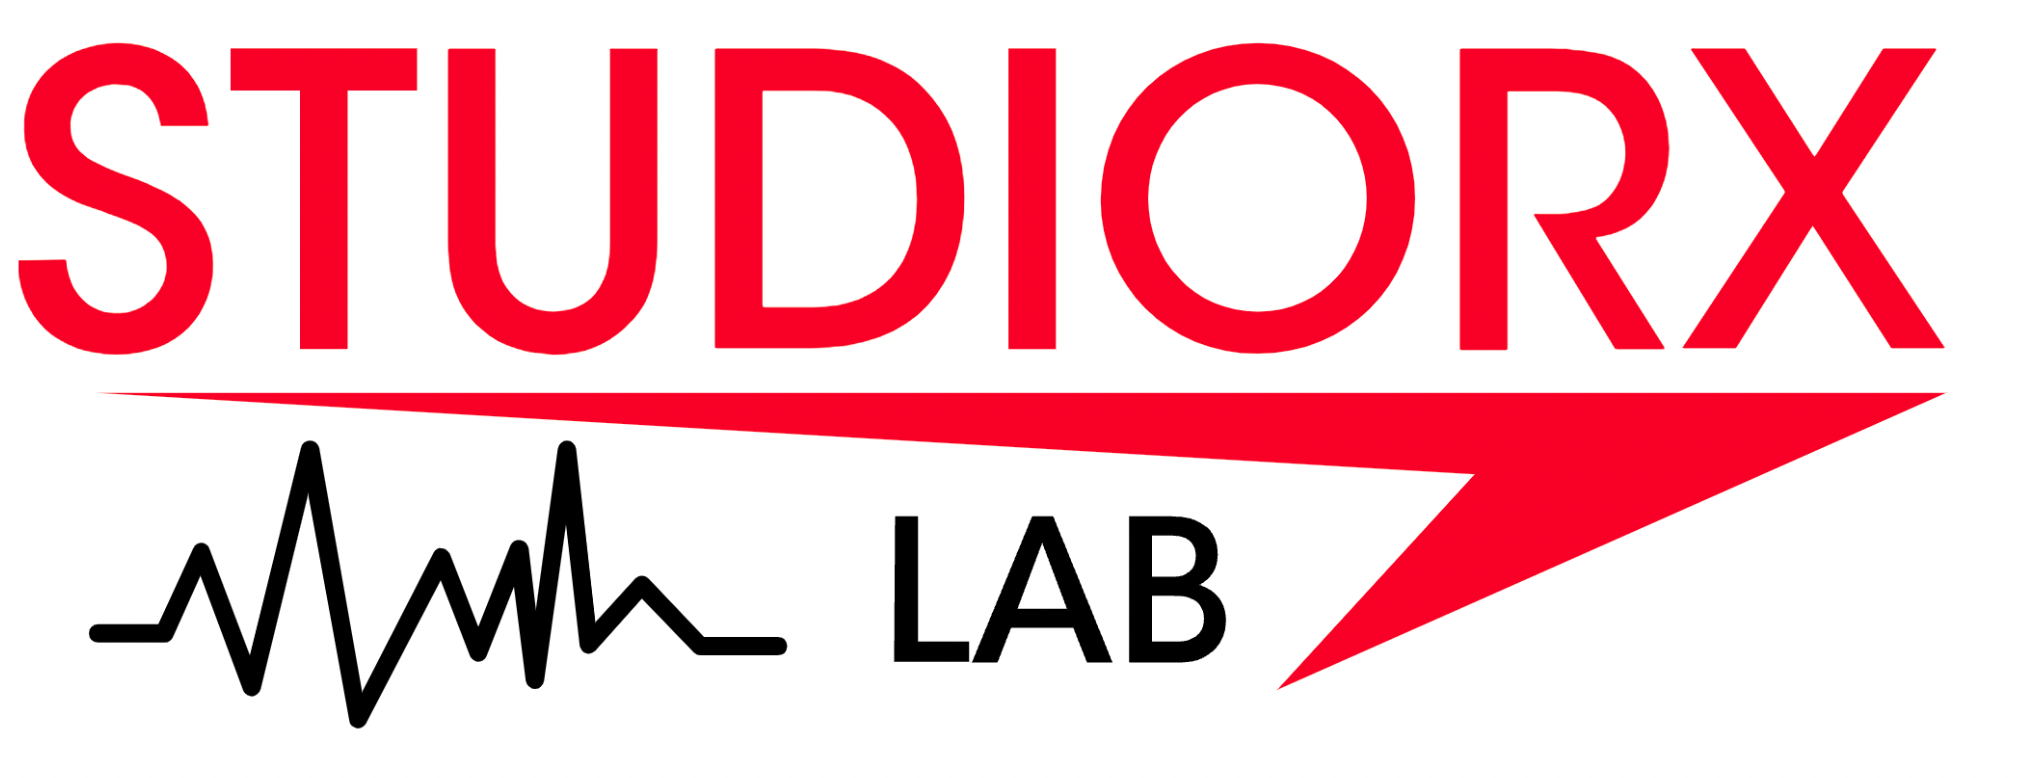 Studio RX lab